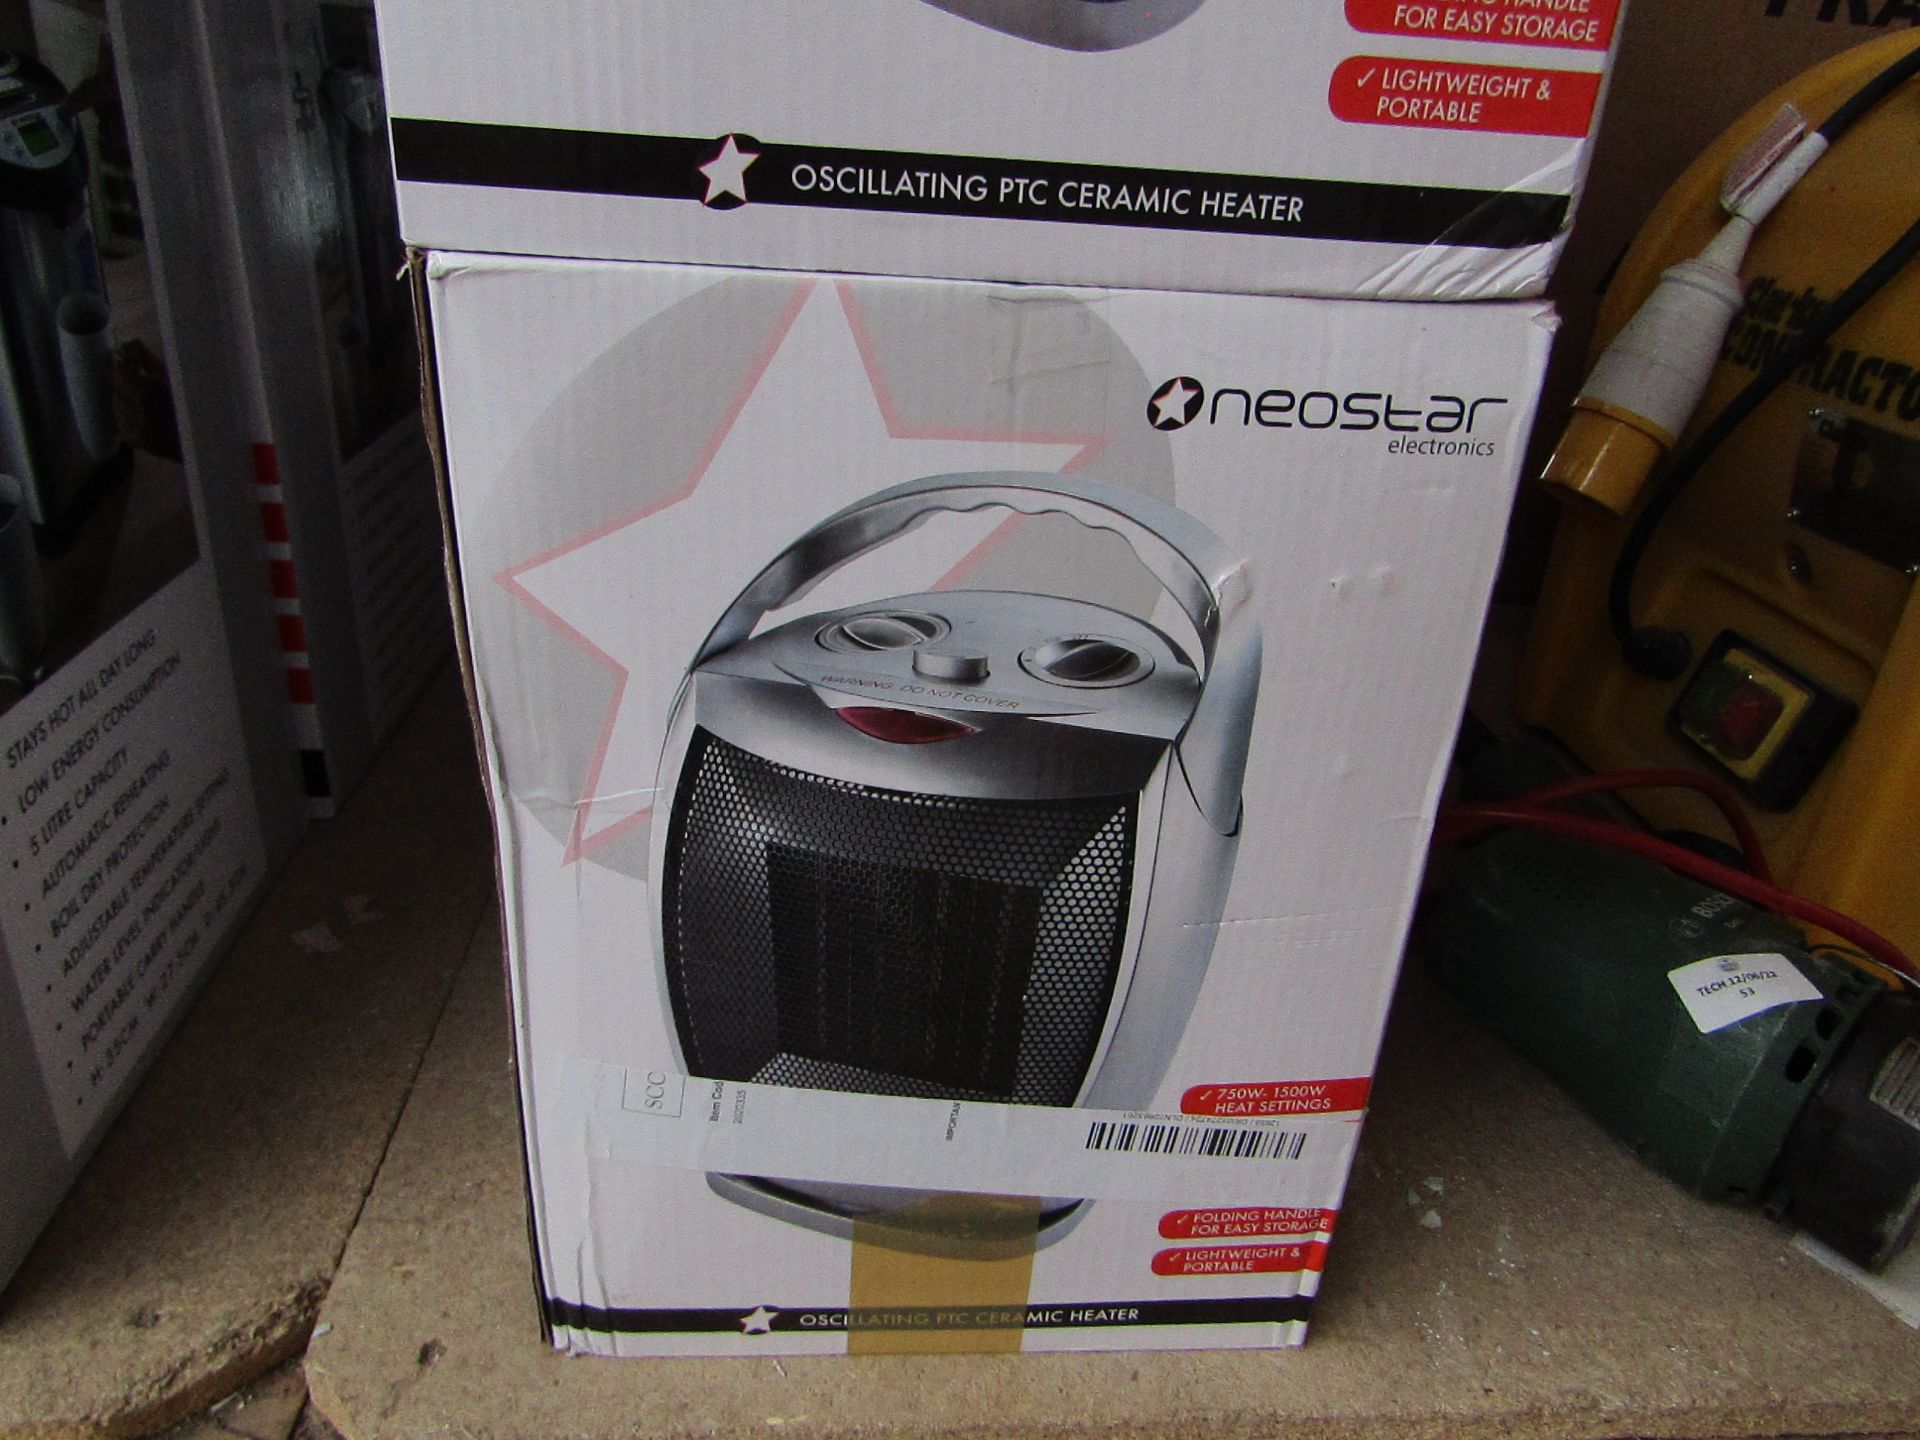 Neostar - Oscillating PTC Ceramic Heater ( 750w / 1500w ) - Unused & Boxed. RRP £50